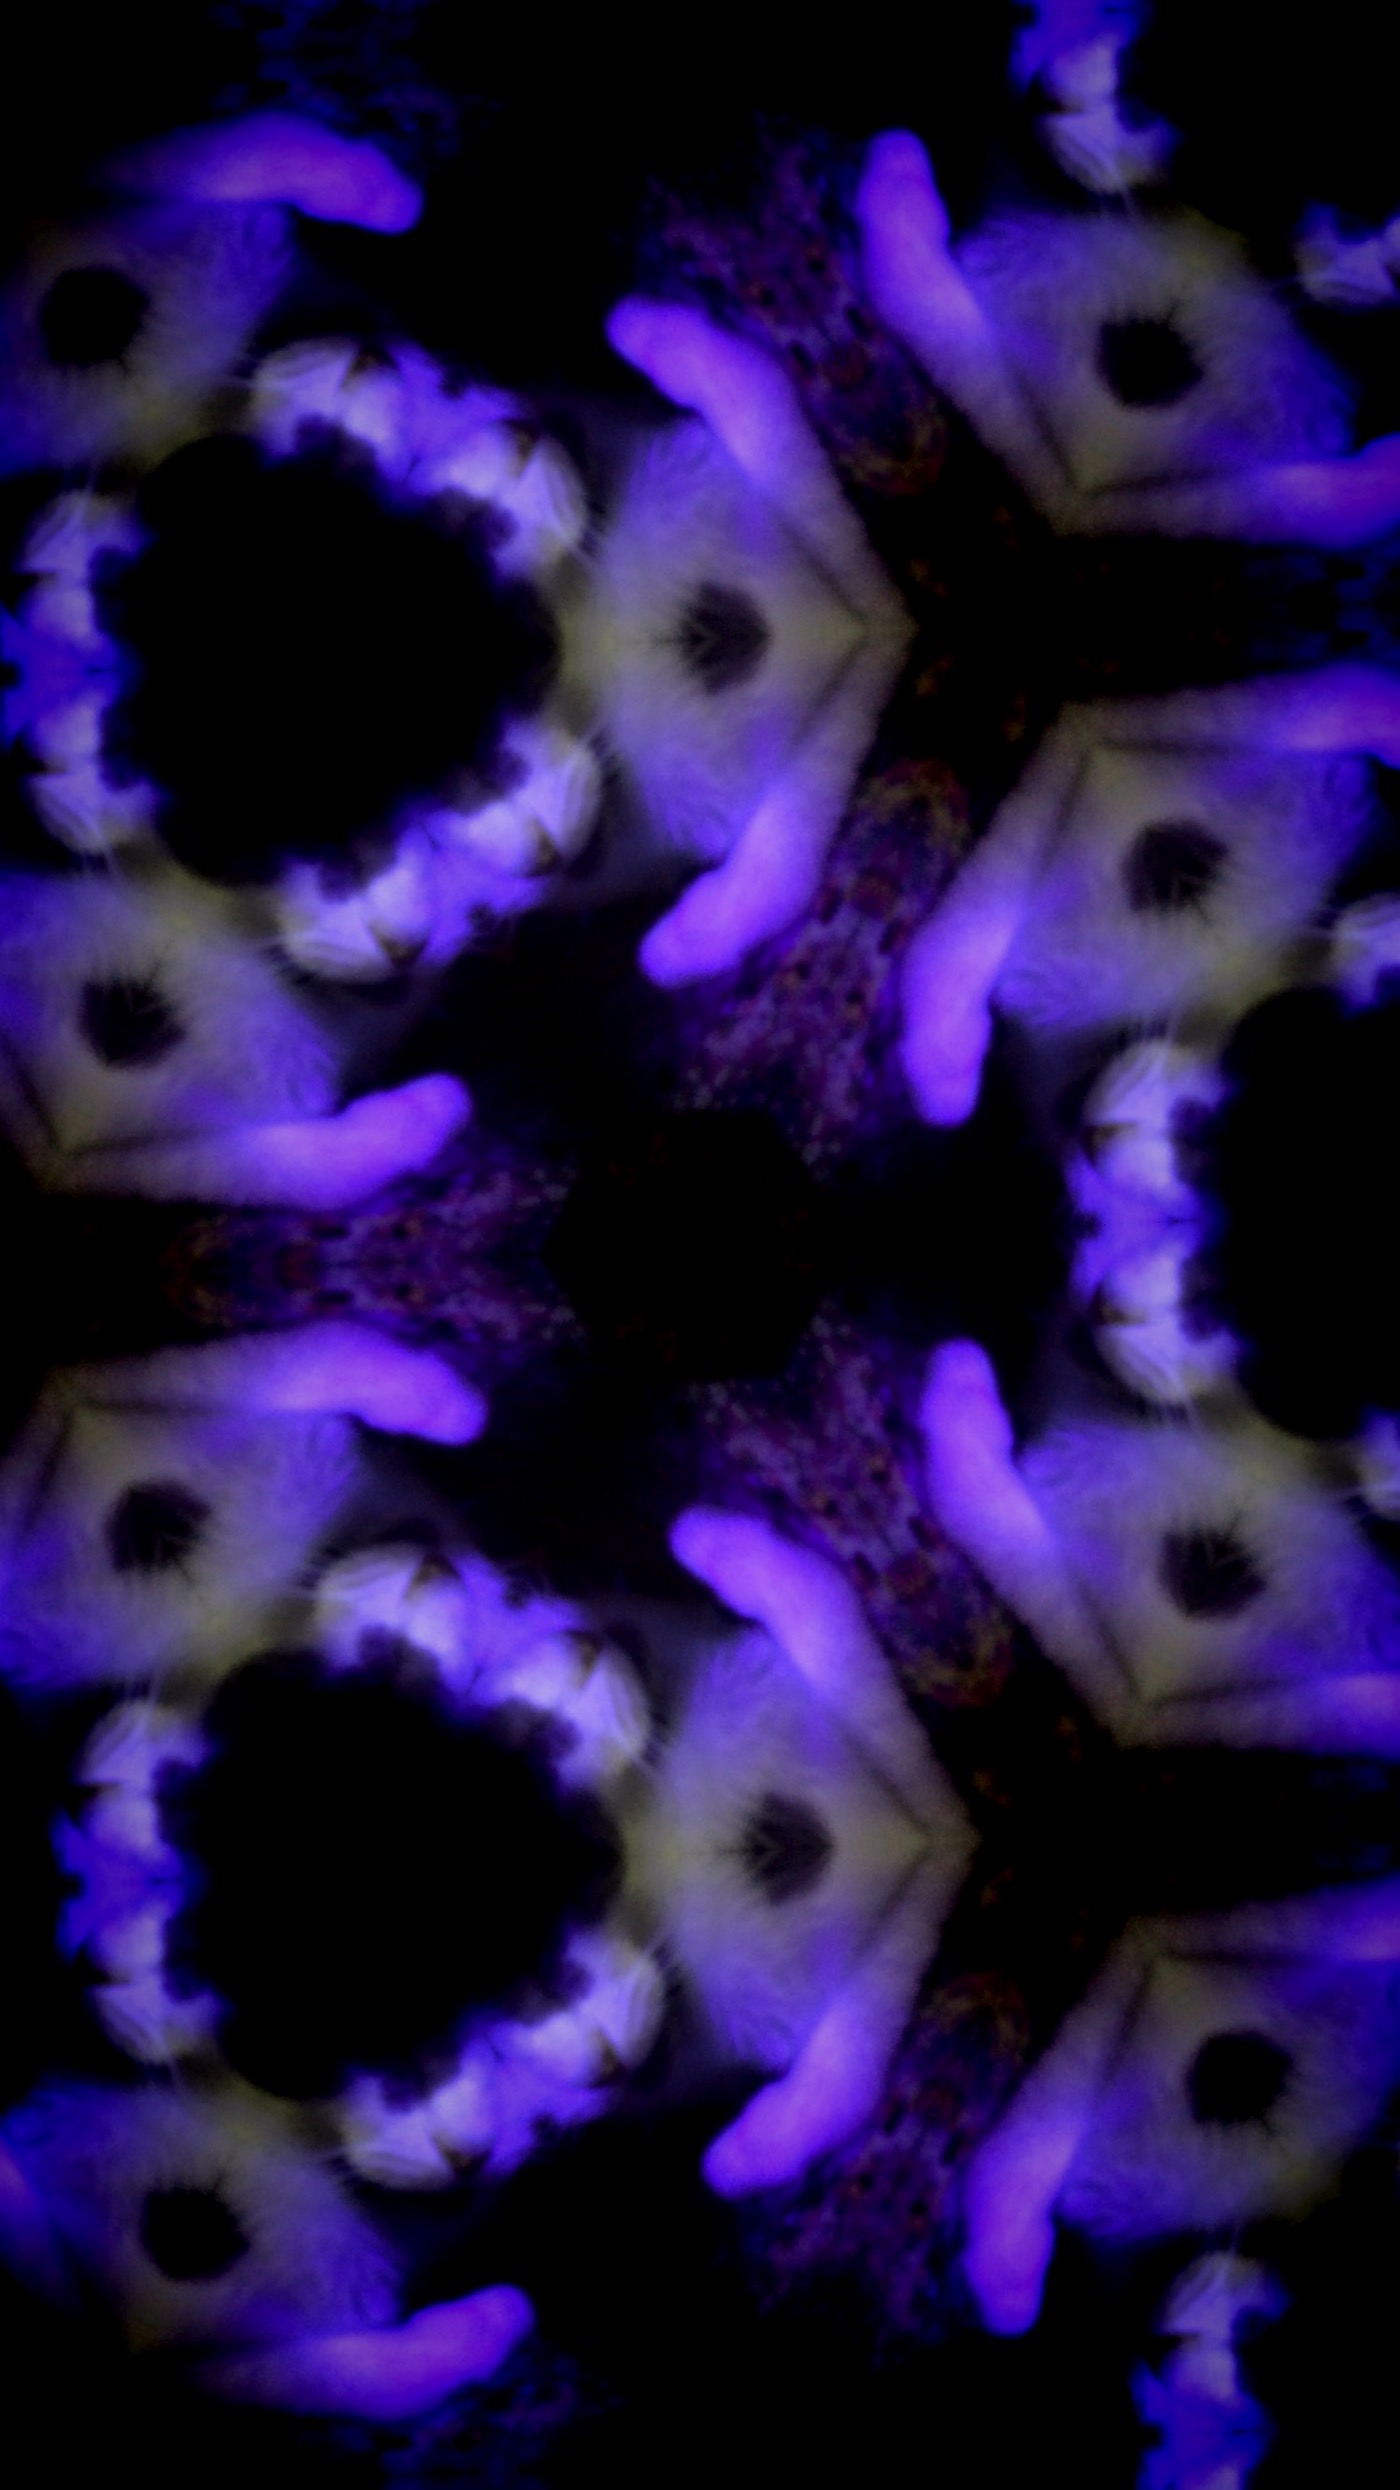 kaleidoscope creatures blacklight neonmob photo art